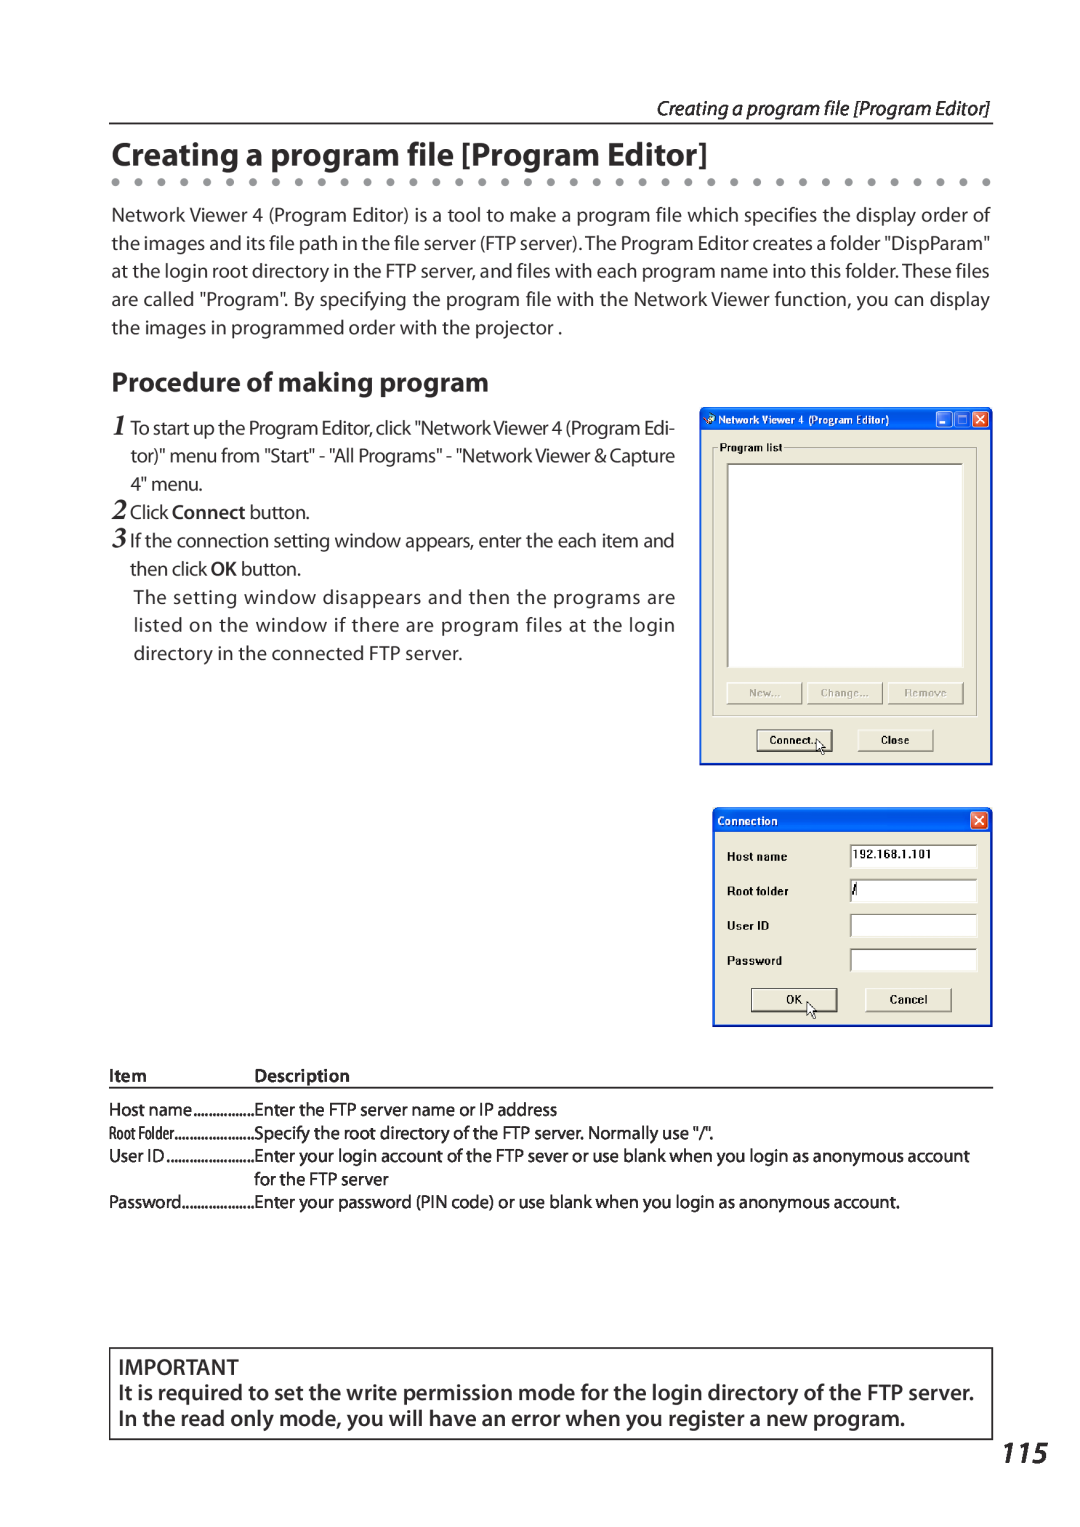 Eiki QXXAVC922---P owner manual Creating a program file Program Editor, Procedure of making program 